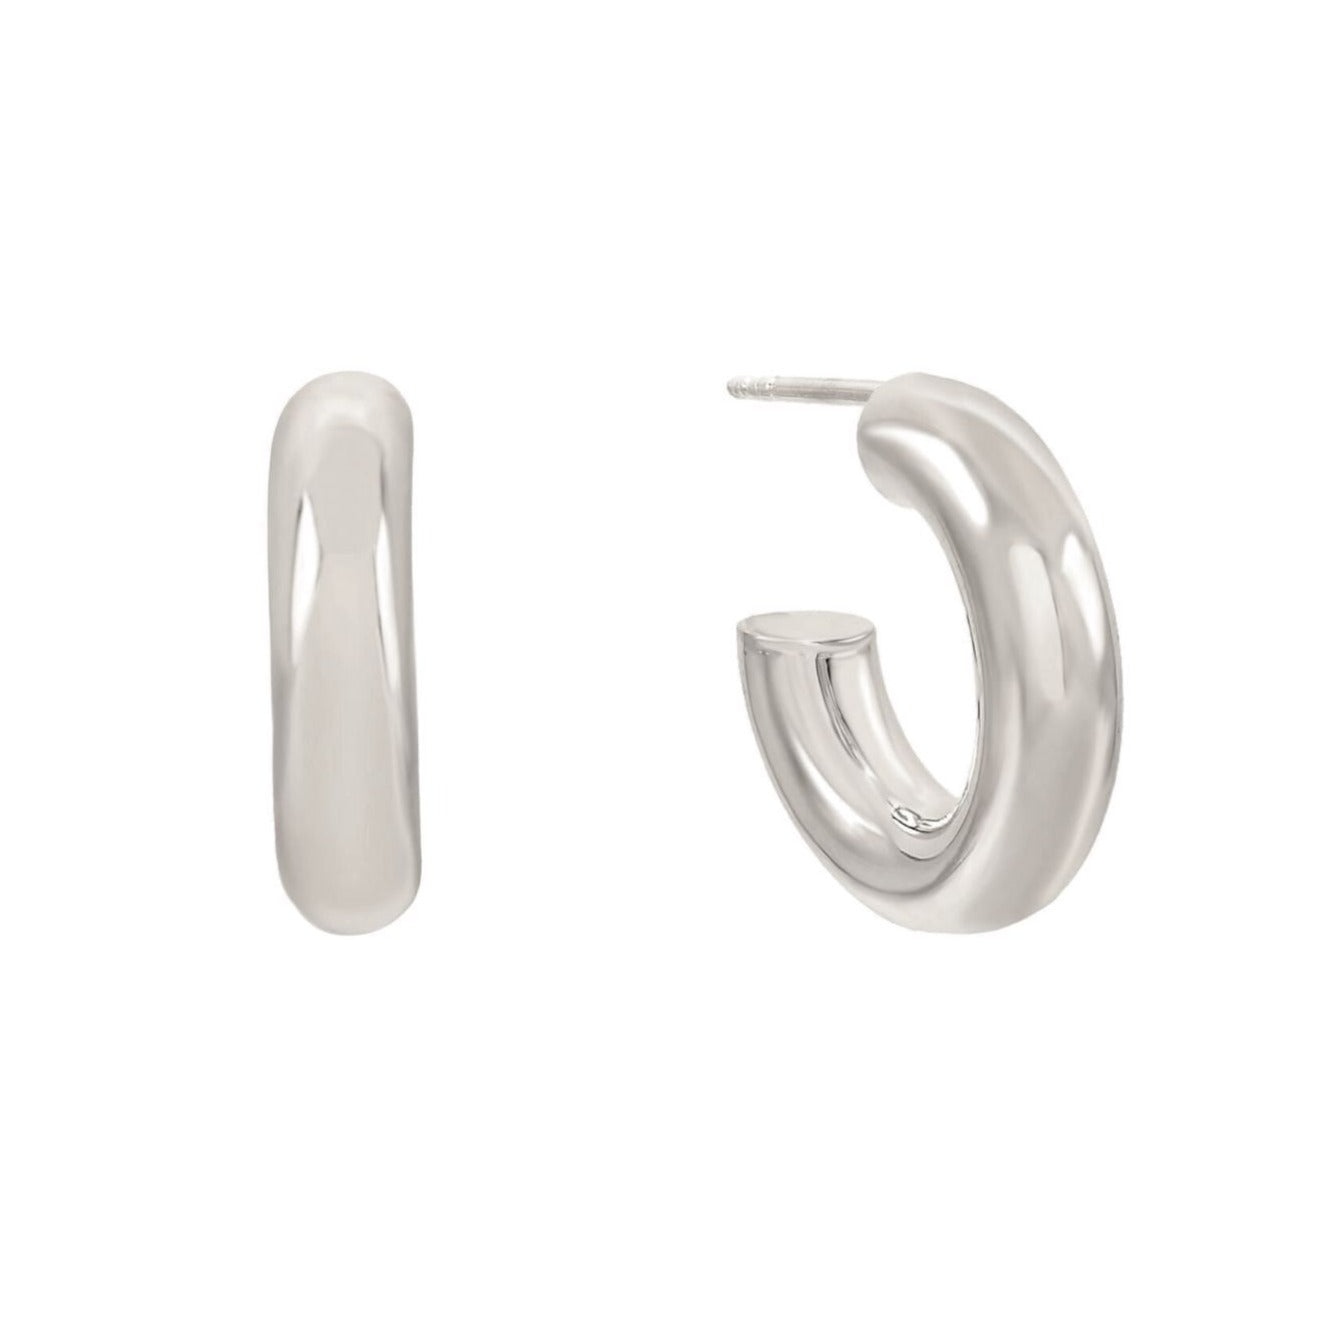 Thick Twist Hoops, Small Bold Hoop Earrings, Statement Silver Hoops Sterling Silver / 20mm